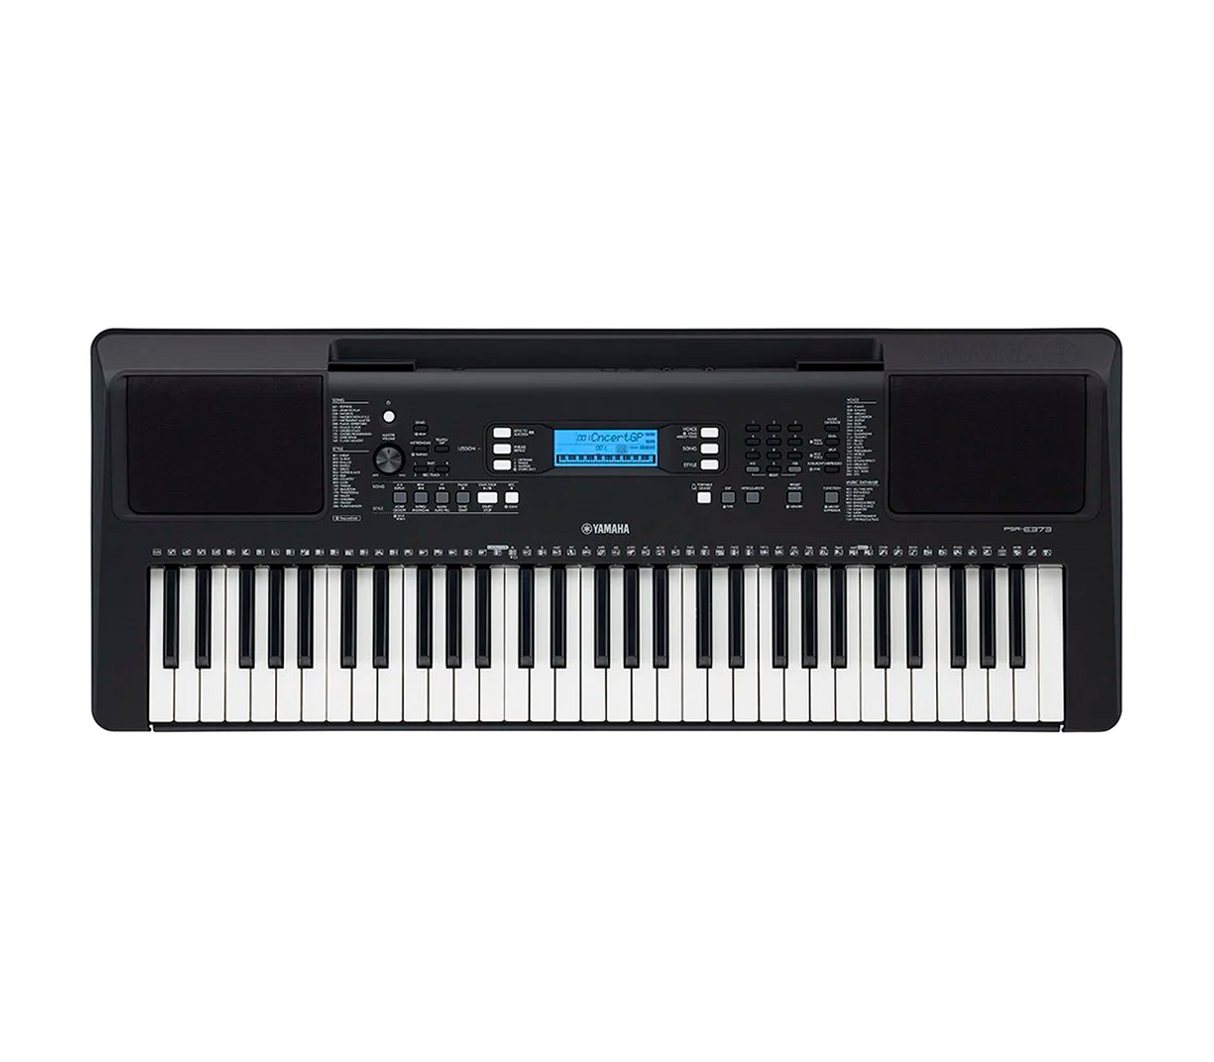 Teclado/órgano electrónico portátil con paral negro Yamaha –